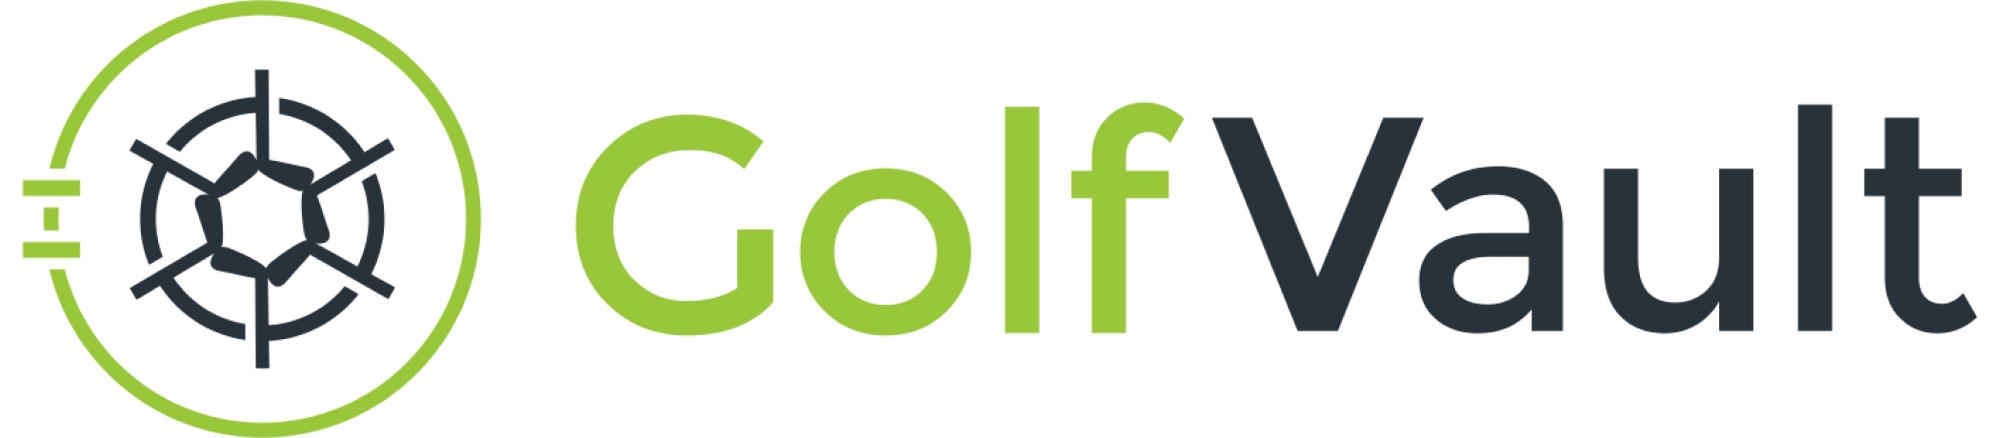 cobra golf logo vector